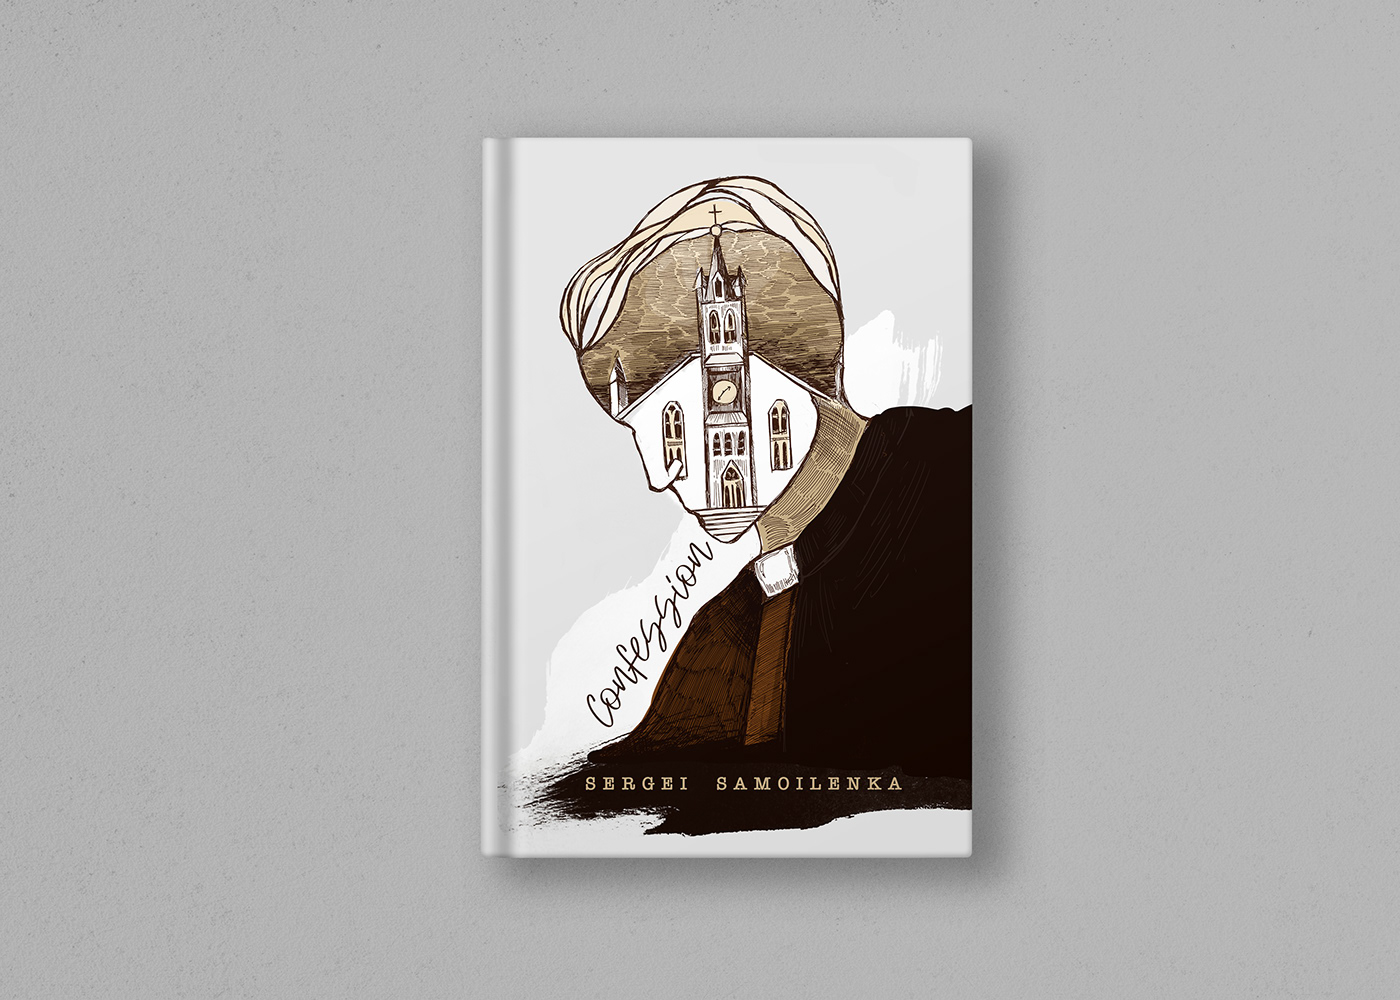 audiobook cover book cover churche confession cover ink cover lita akhmetova multiexposure Mystic Sergei samoilenka